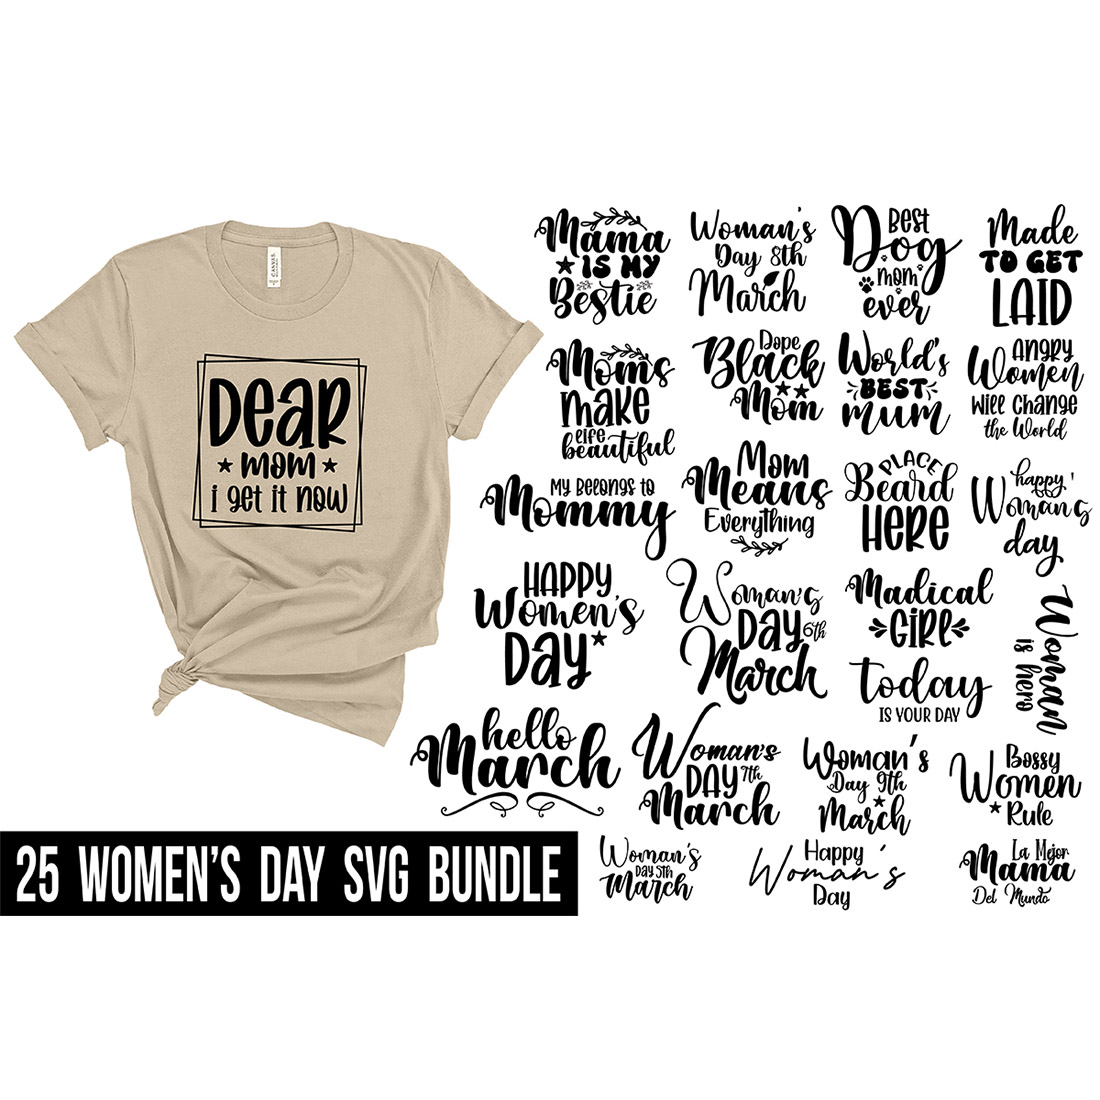 Women's Day SVG Bundle, Women's Day SVG designs, Girl power designs, SVG files, Digital downloads, preview image.